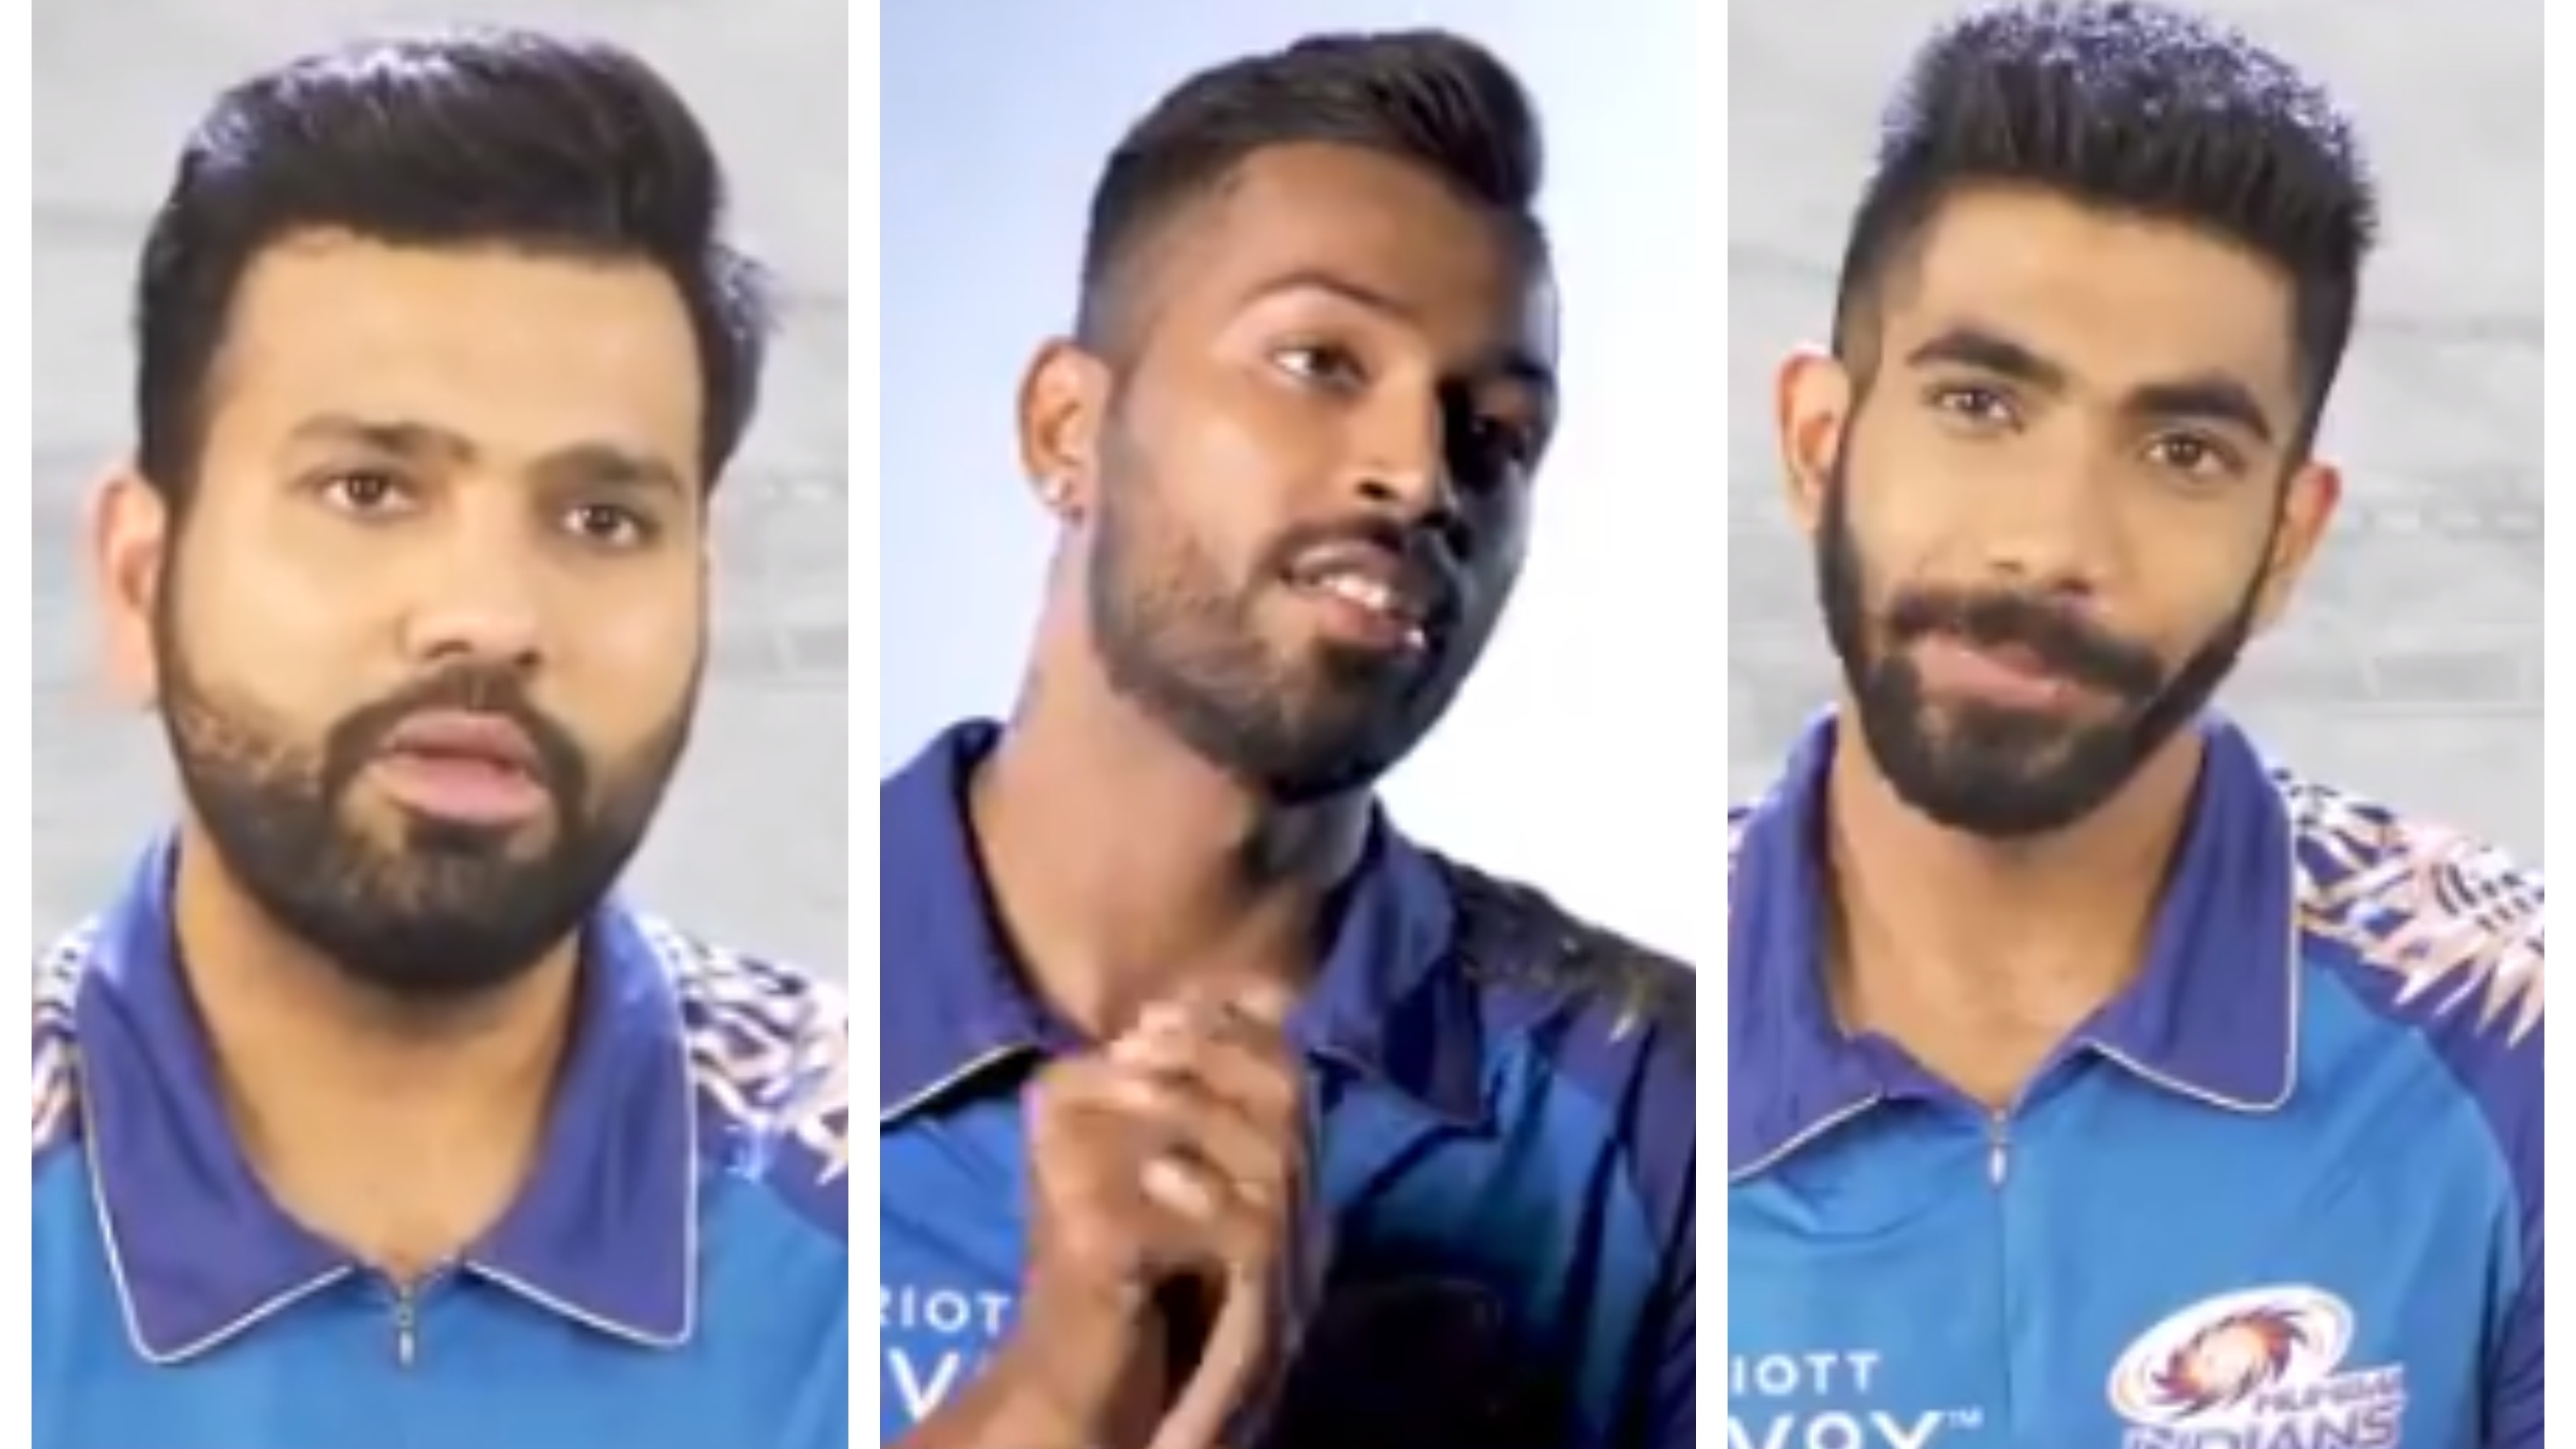 IPL 2020: WATCH – Mumbai players share their views on MI-CSK rivalry, Rohit calls it 